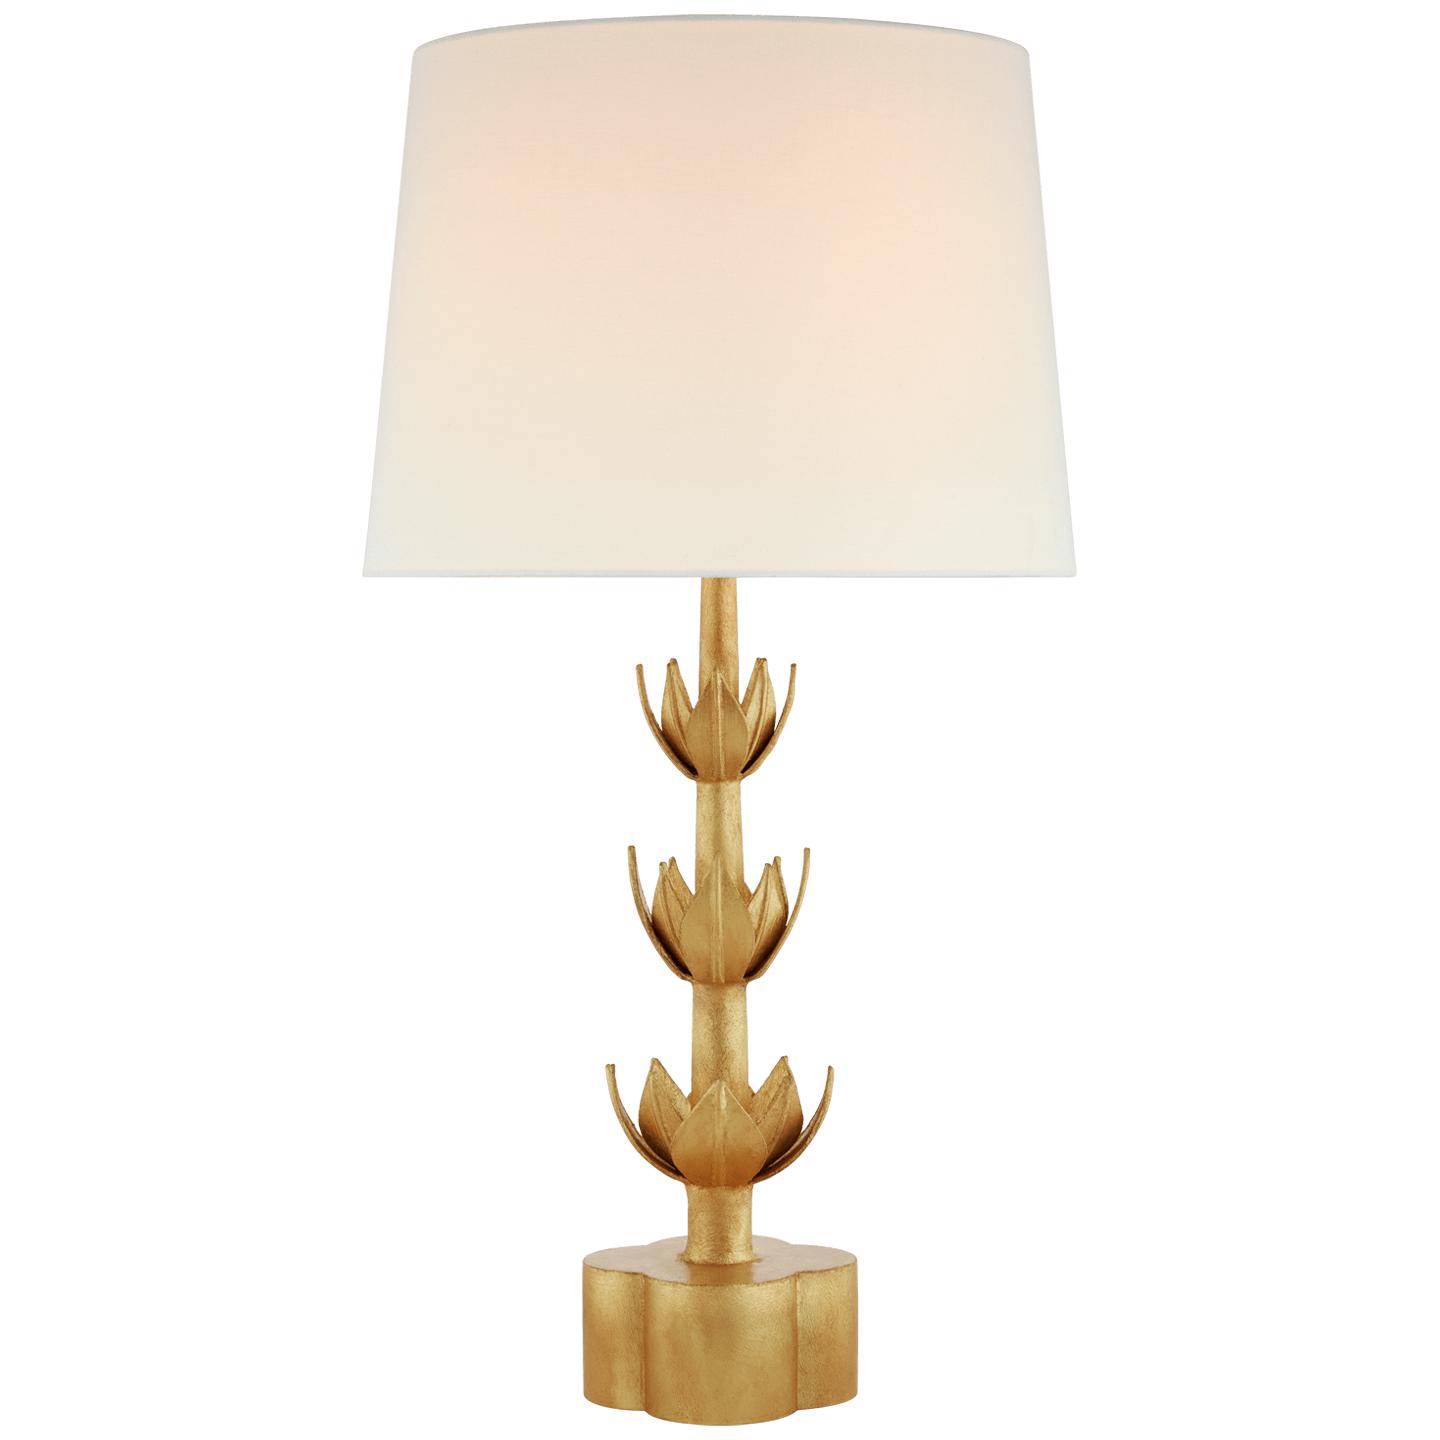 Купить Настольная лампа Alberto Large Triple Table Lamp в интернет-магазине roooms.ru